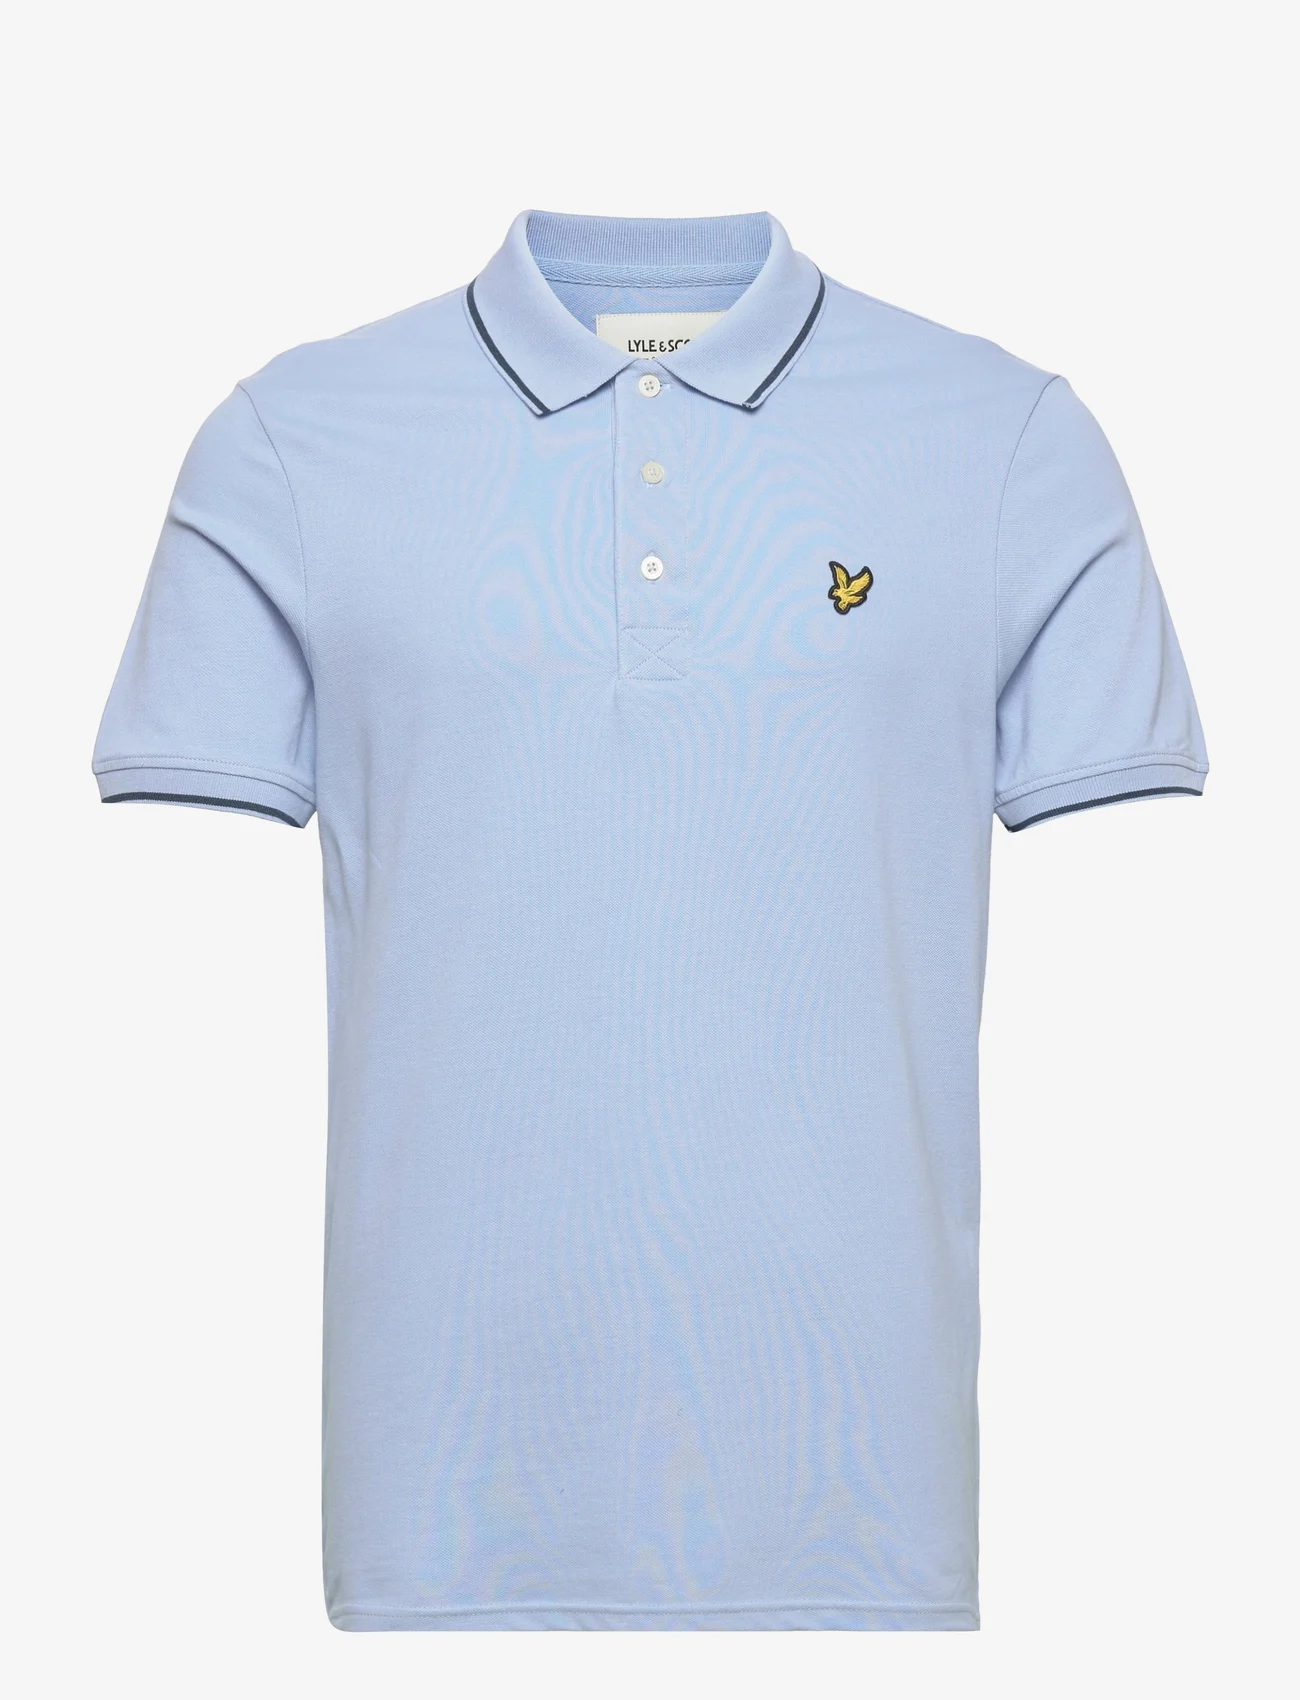 Lyle & Scott - Tipped Polo Shirt - kurzärmelig - light blue/ dark navy - 1